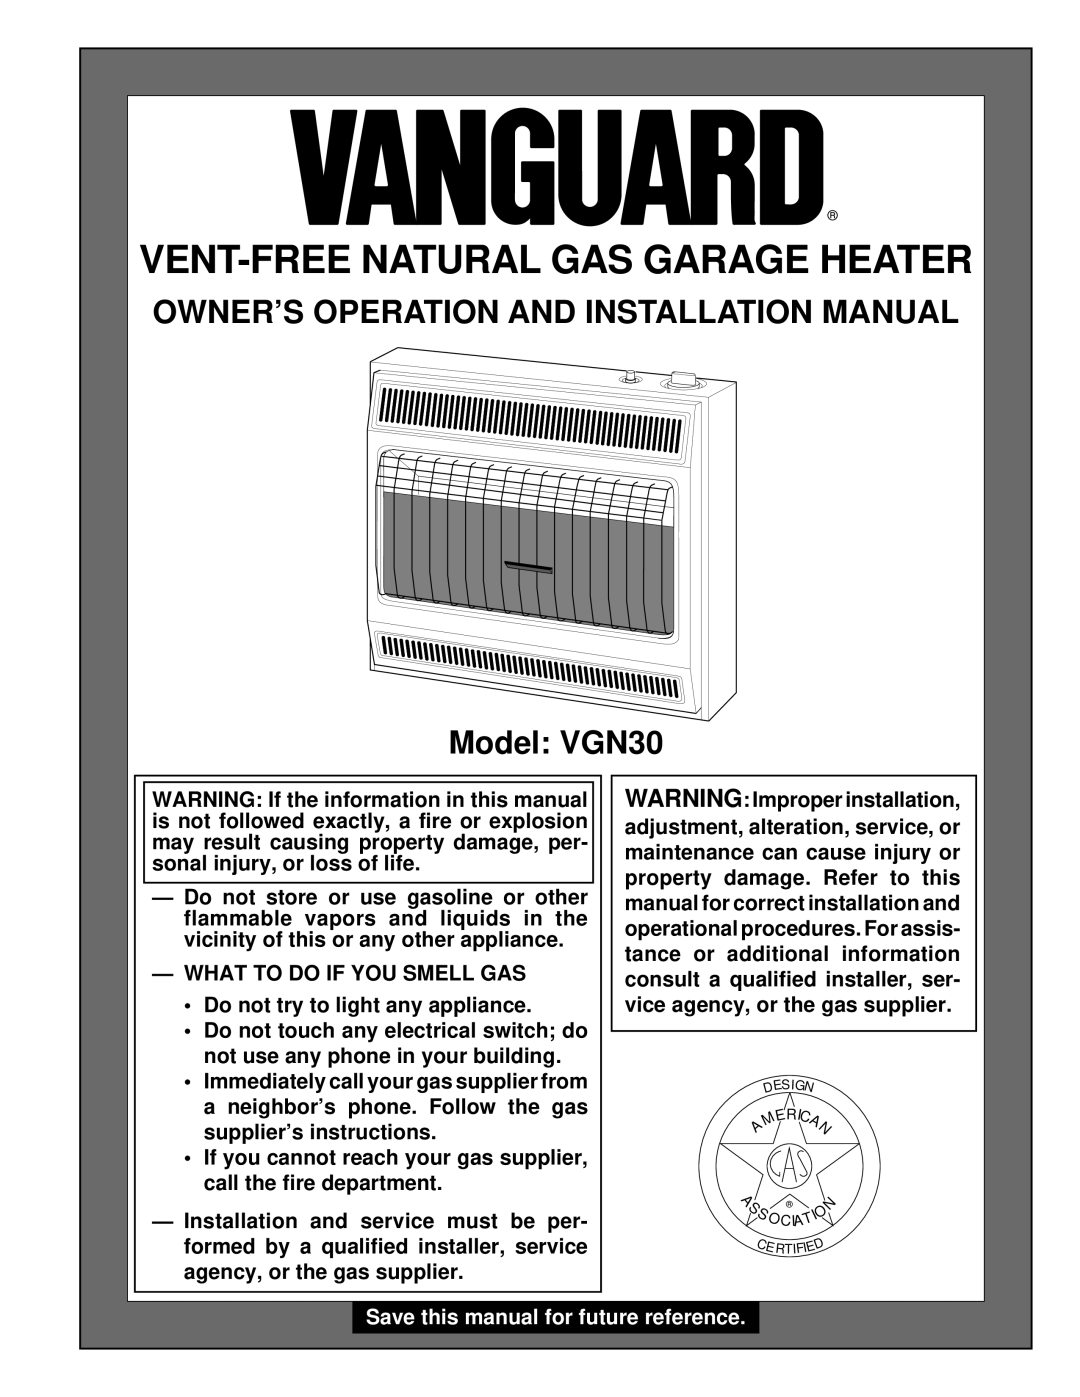 Vanguard Heating installation manual Owner’S Operation And Installation Manual, Model VGN30 